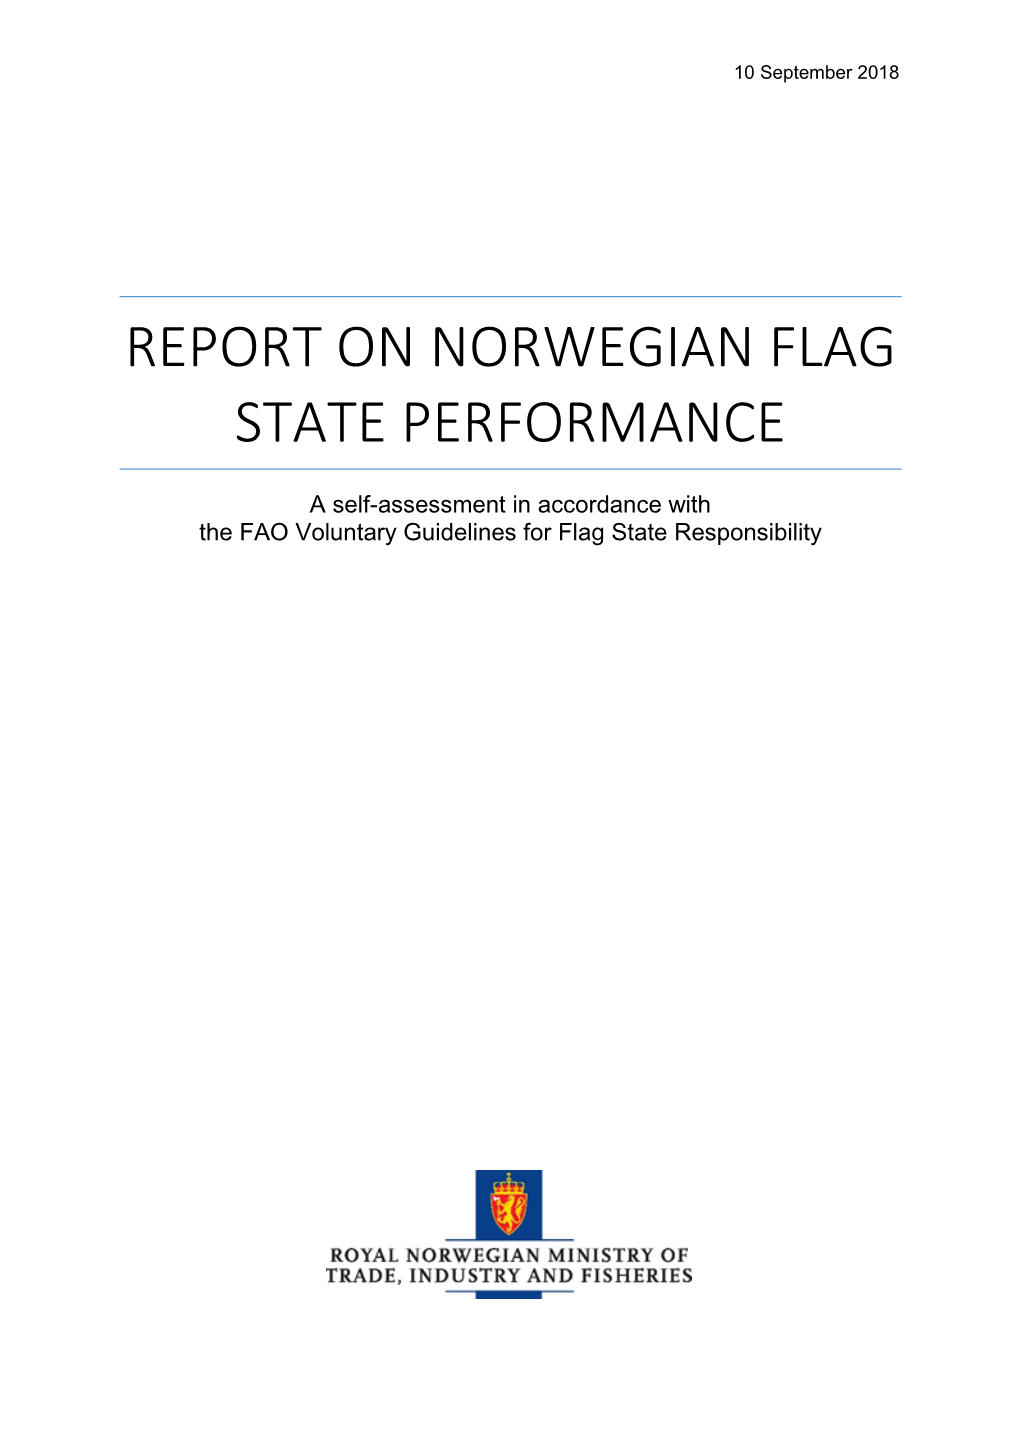 Report on Norwegian Flag State Performance